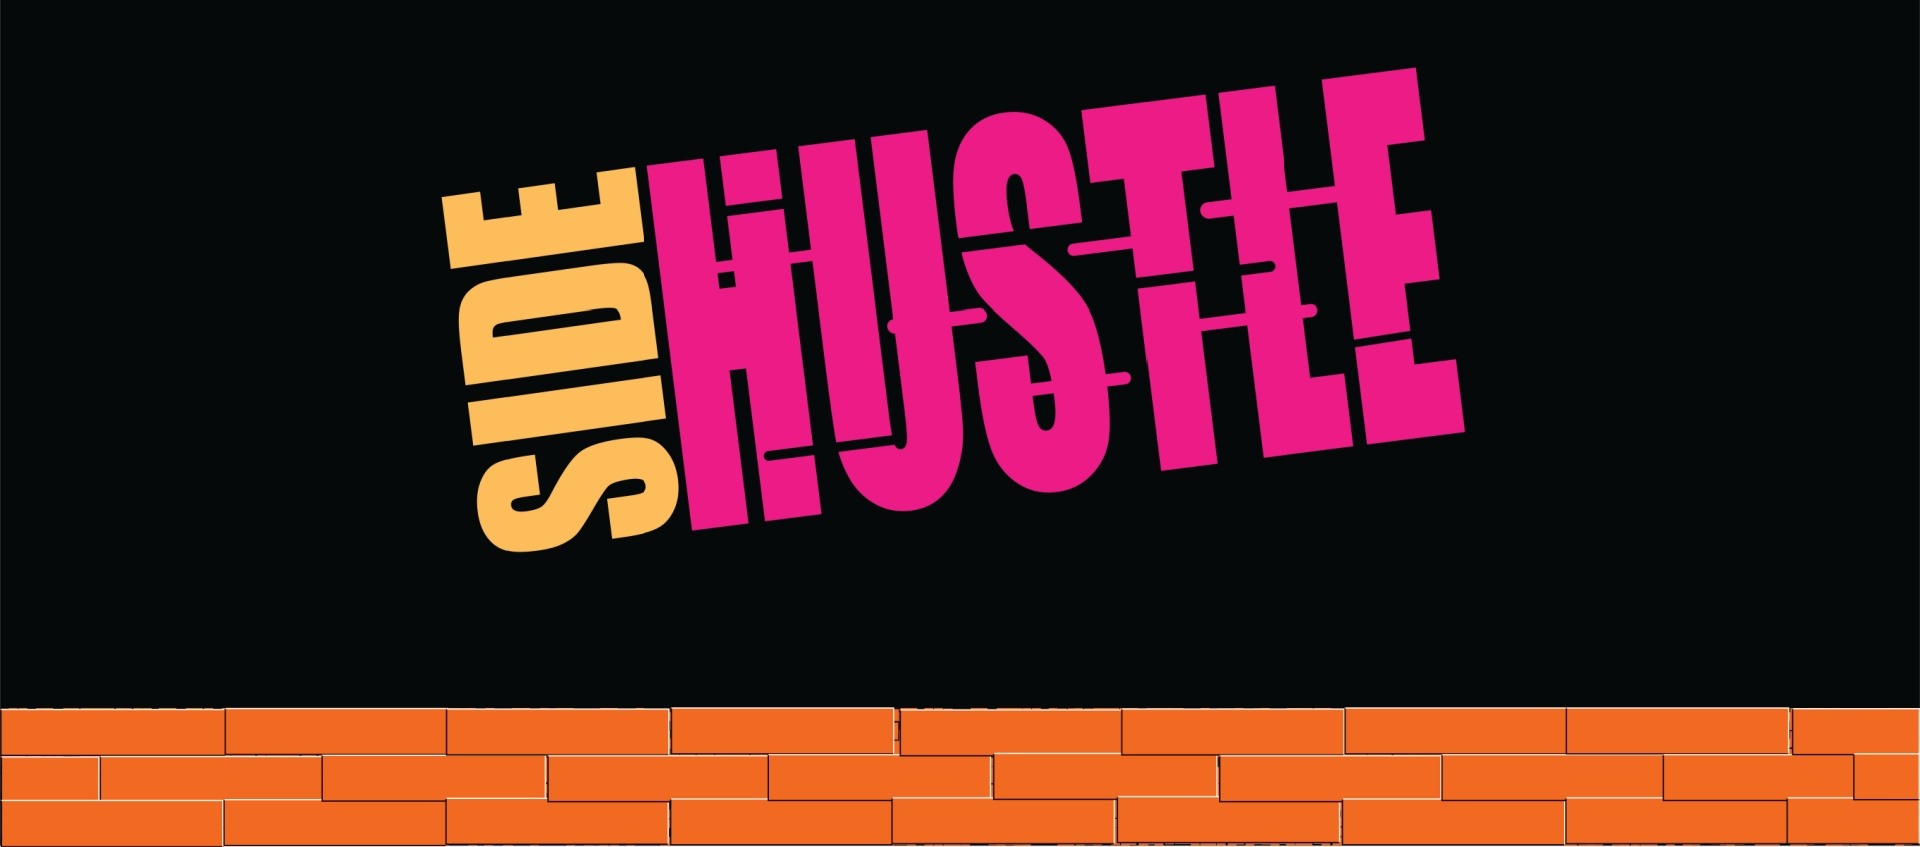 Side hustle graphic